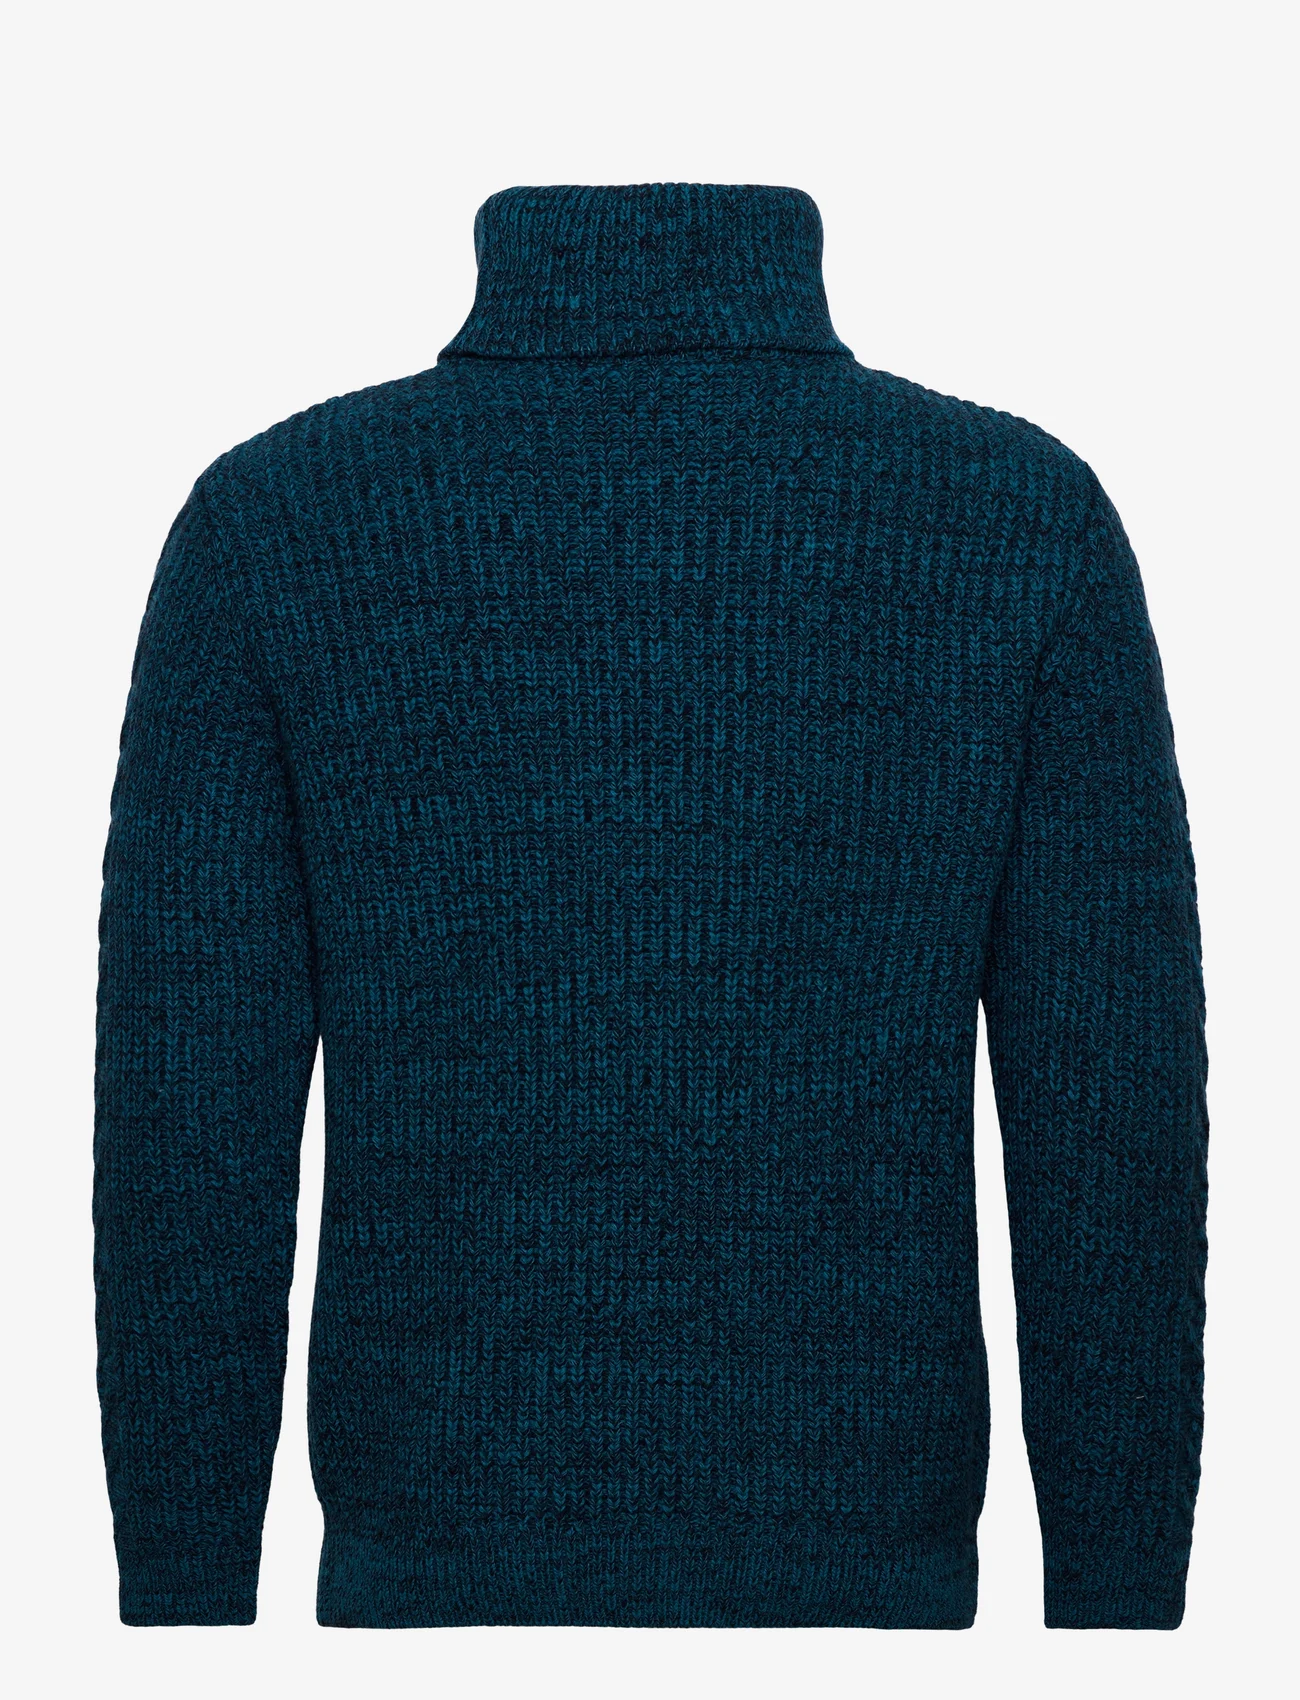 Armor Lux - Turtle neck Sweater Héritage - rollkragen - moulinÉ bleu glacial - 1